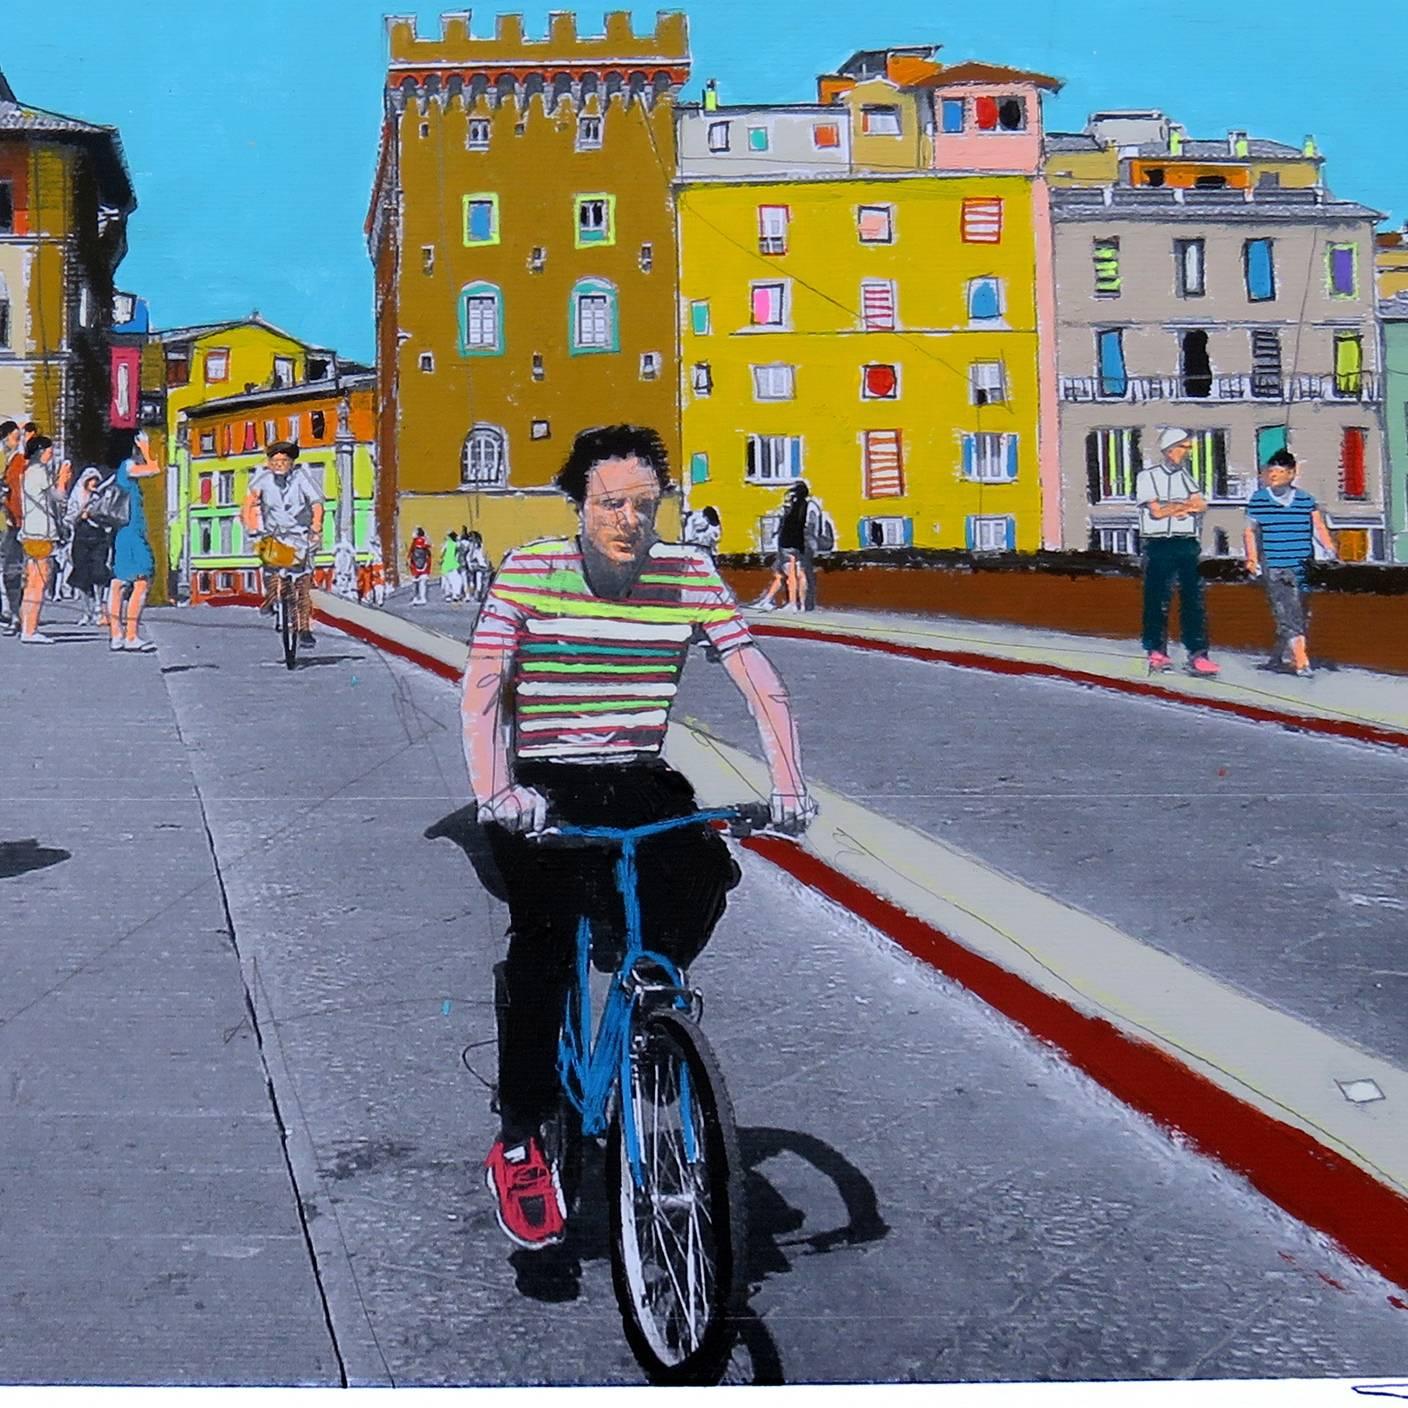 Crossing Bridges in Florence - Pop Art Painting by Fabio Coruzzi